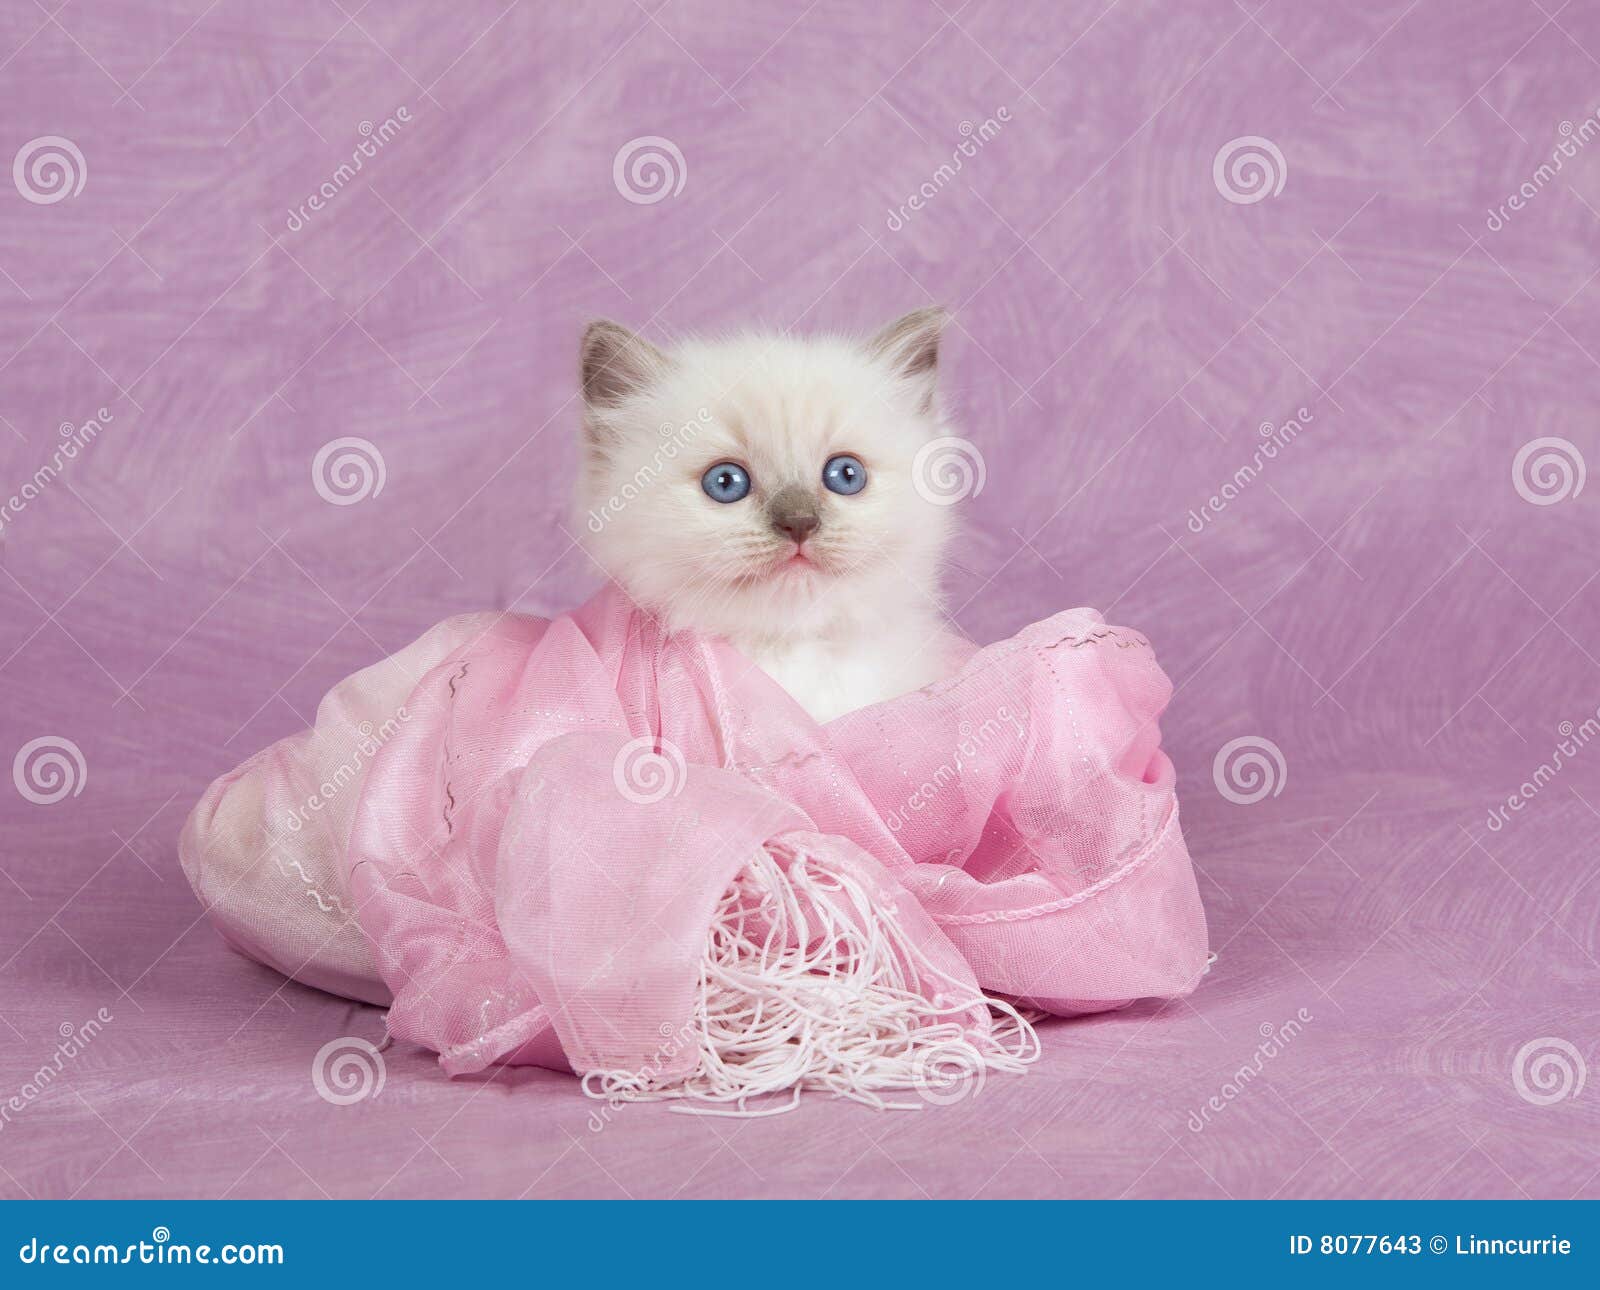 Pretty Cute  Ragdoll  Kitten  On Pink Background Stock Image 